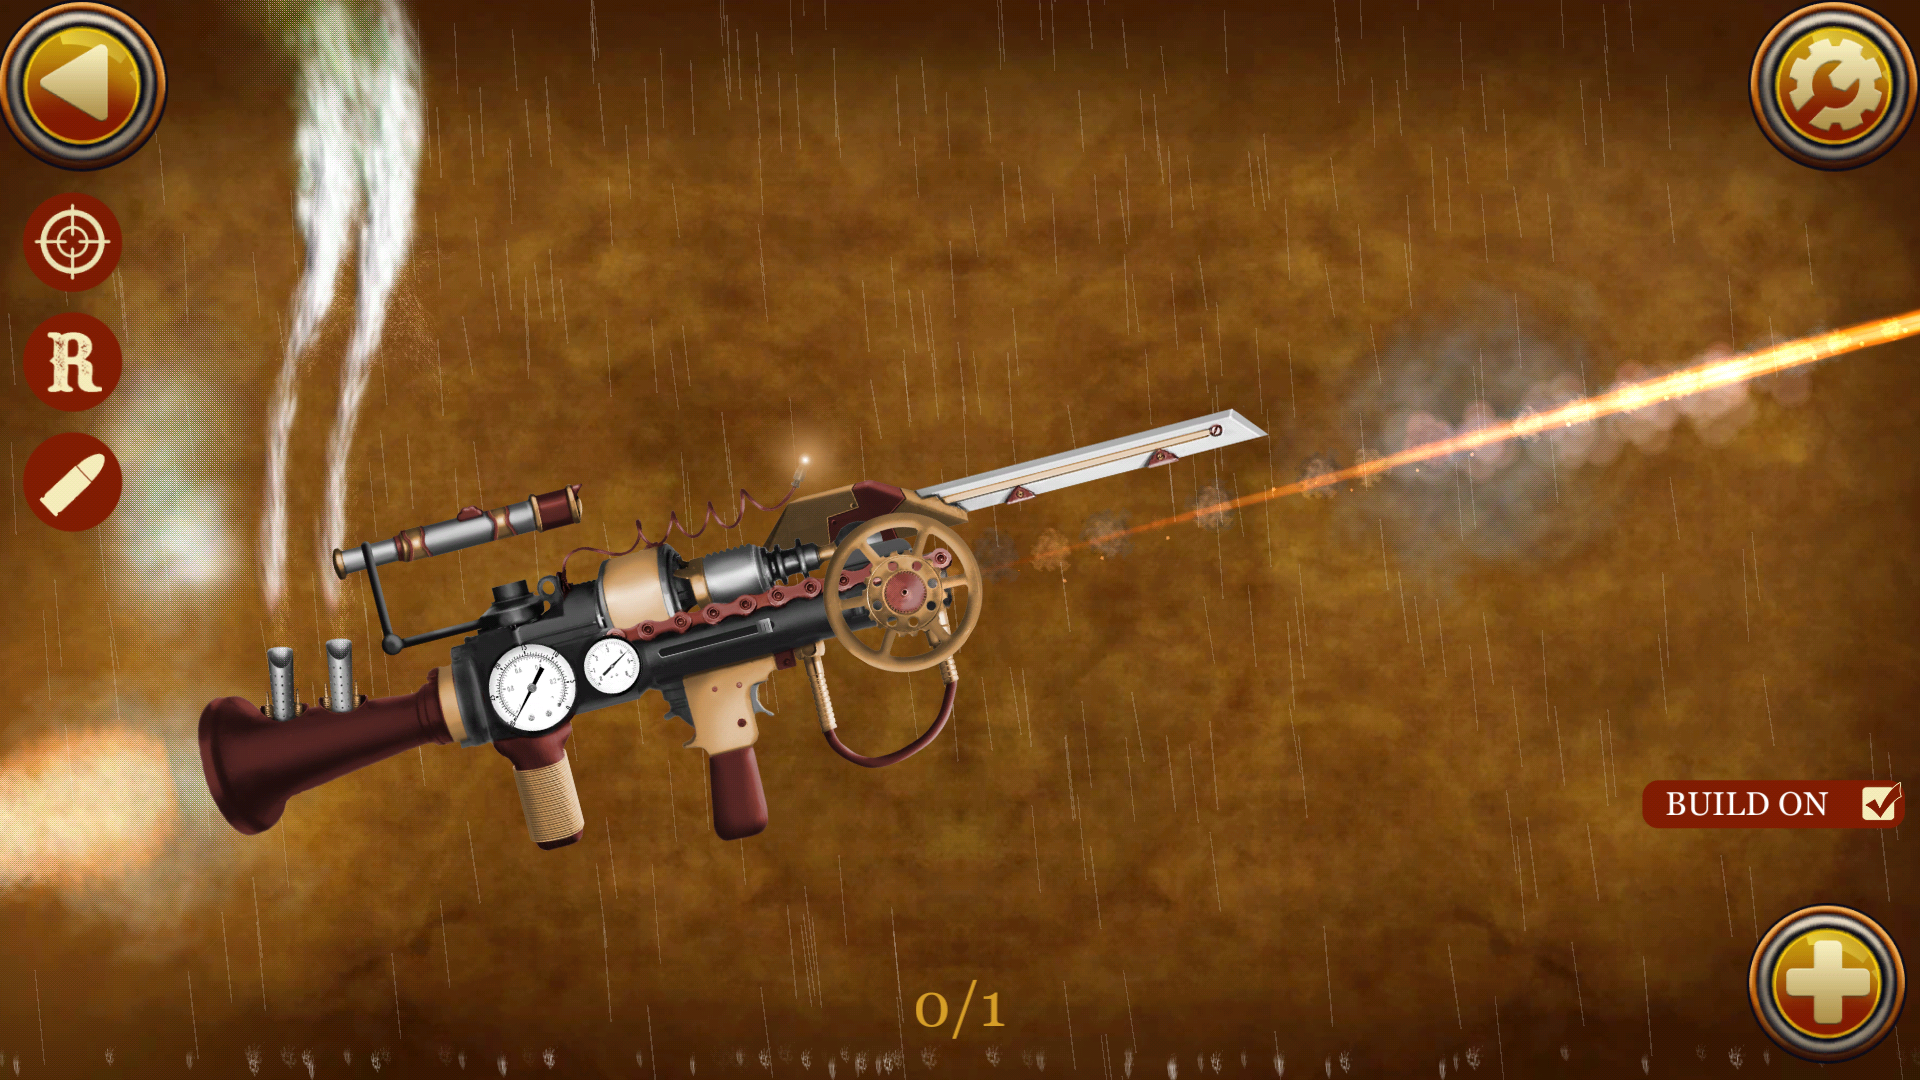 Screenshot 1 of スチームパンク武器シミュレータ 2.3